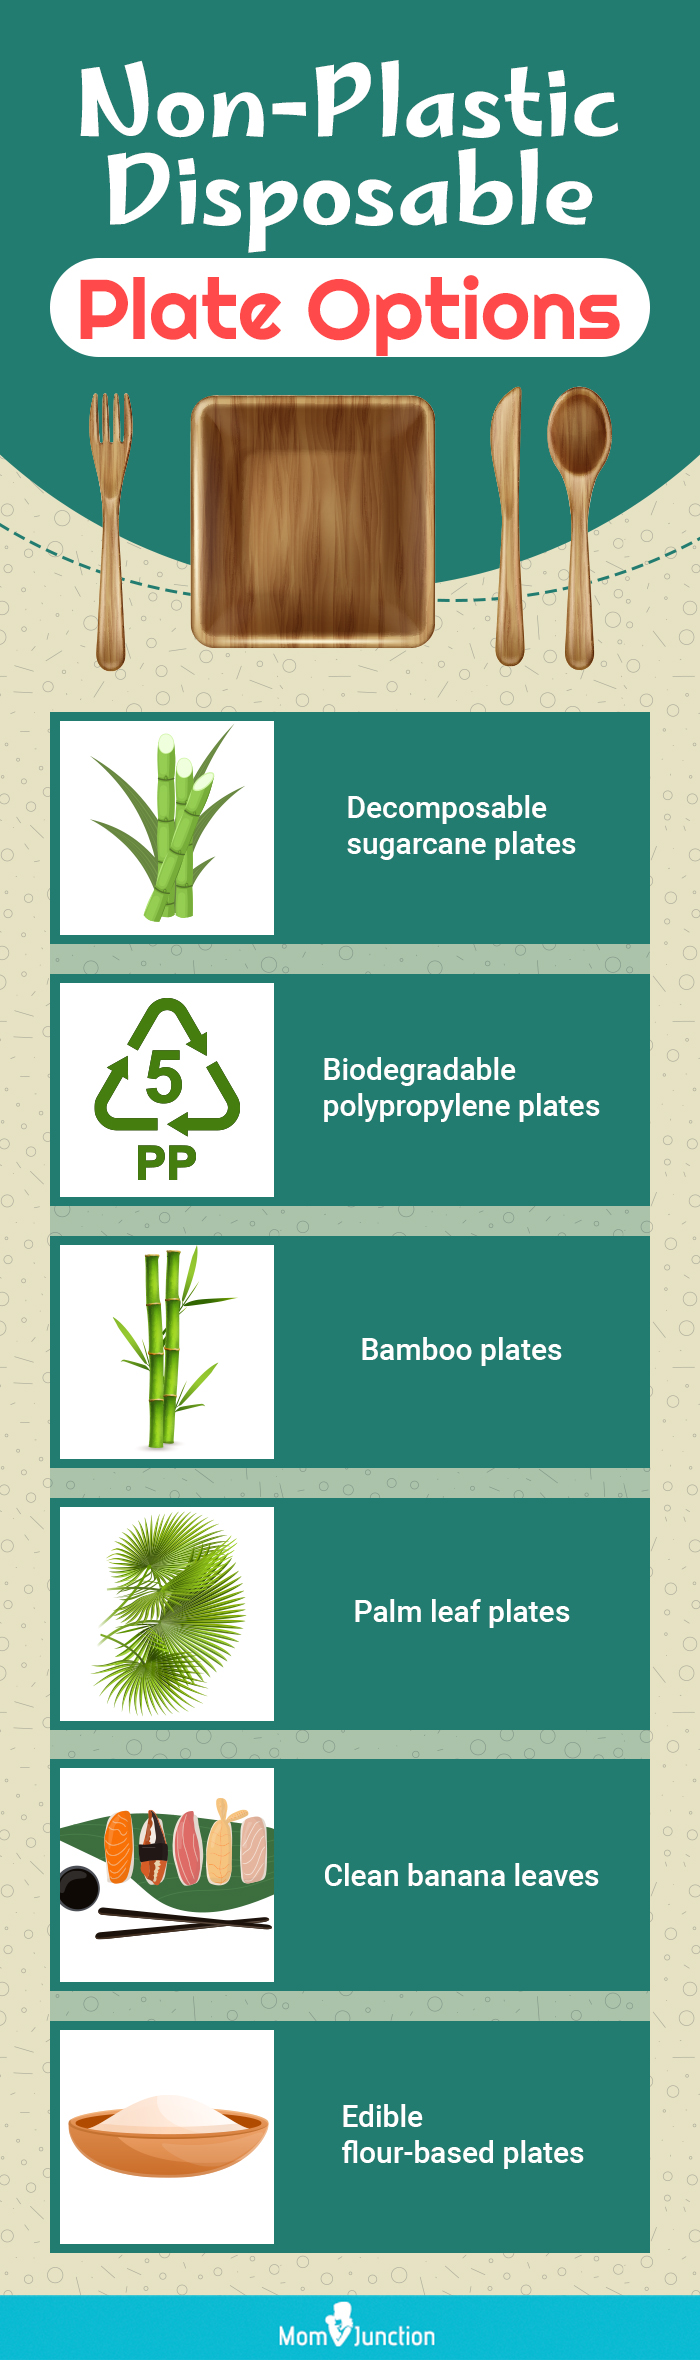 Non-Plastic Disposable Plate Options